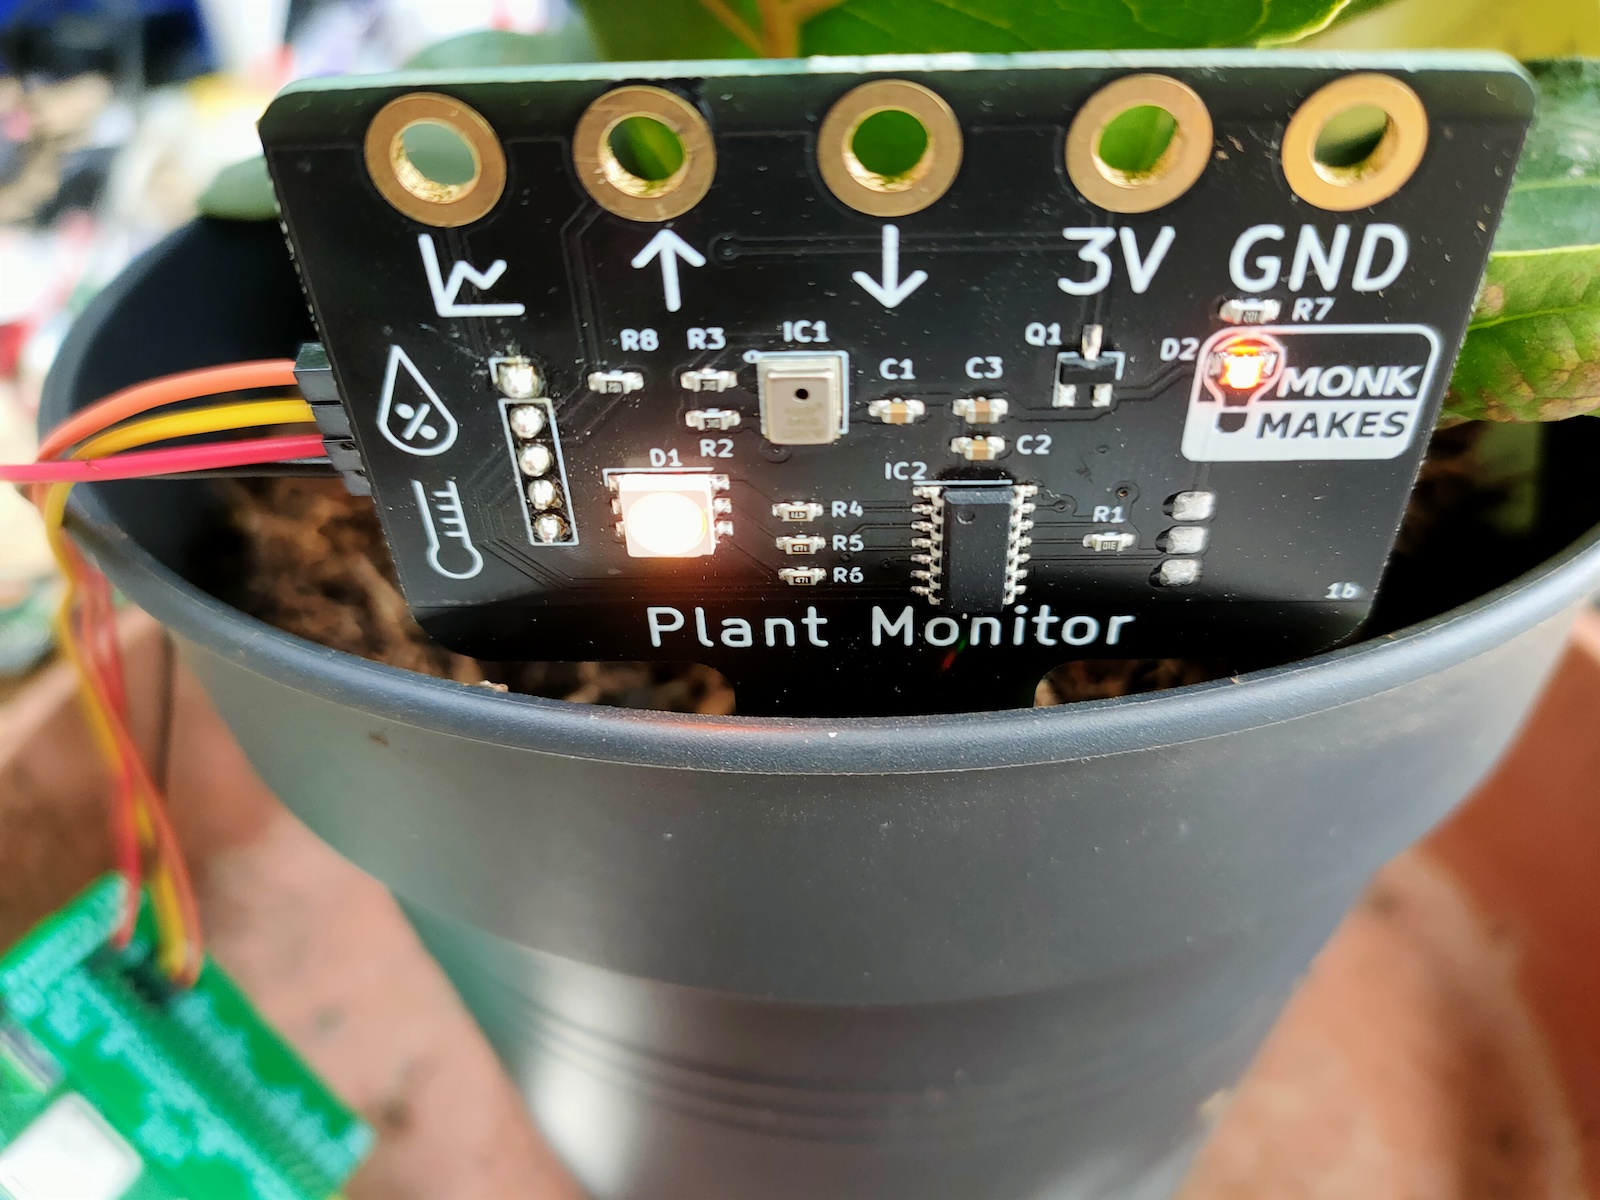 Plant Monitor